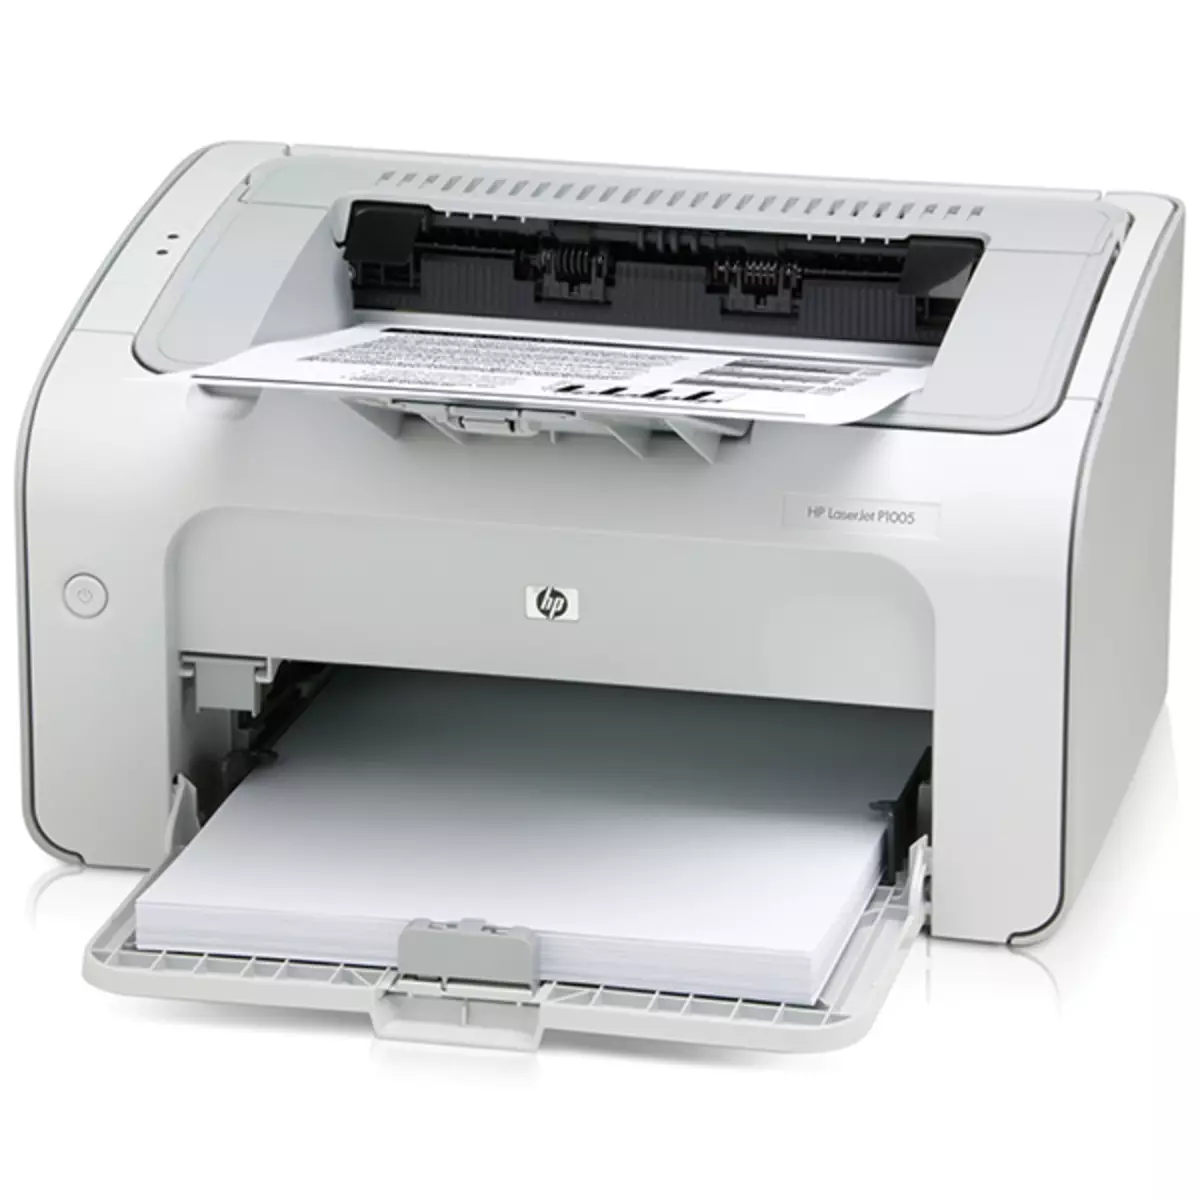 printer HP LaserJet P1005 Download sürücü